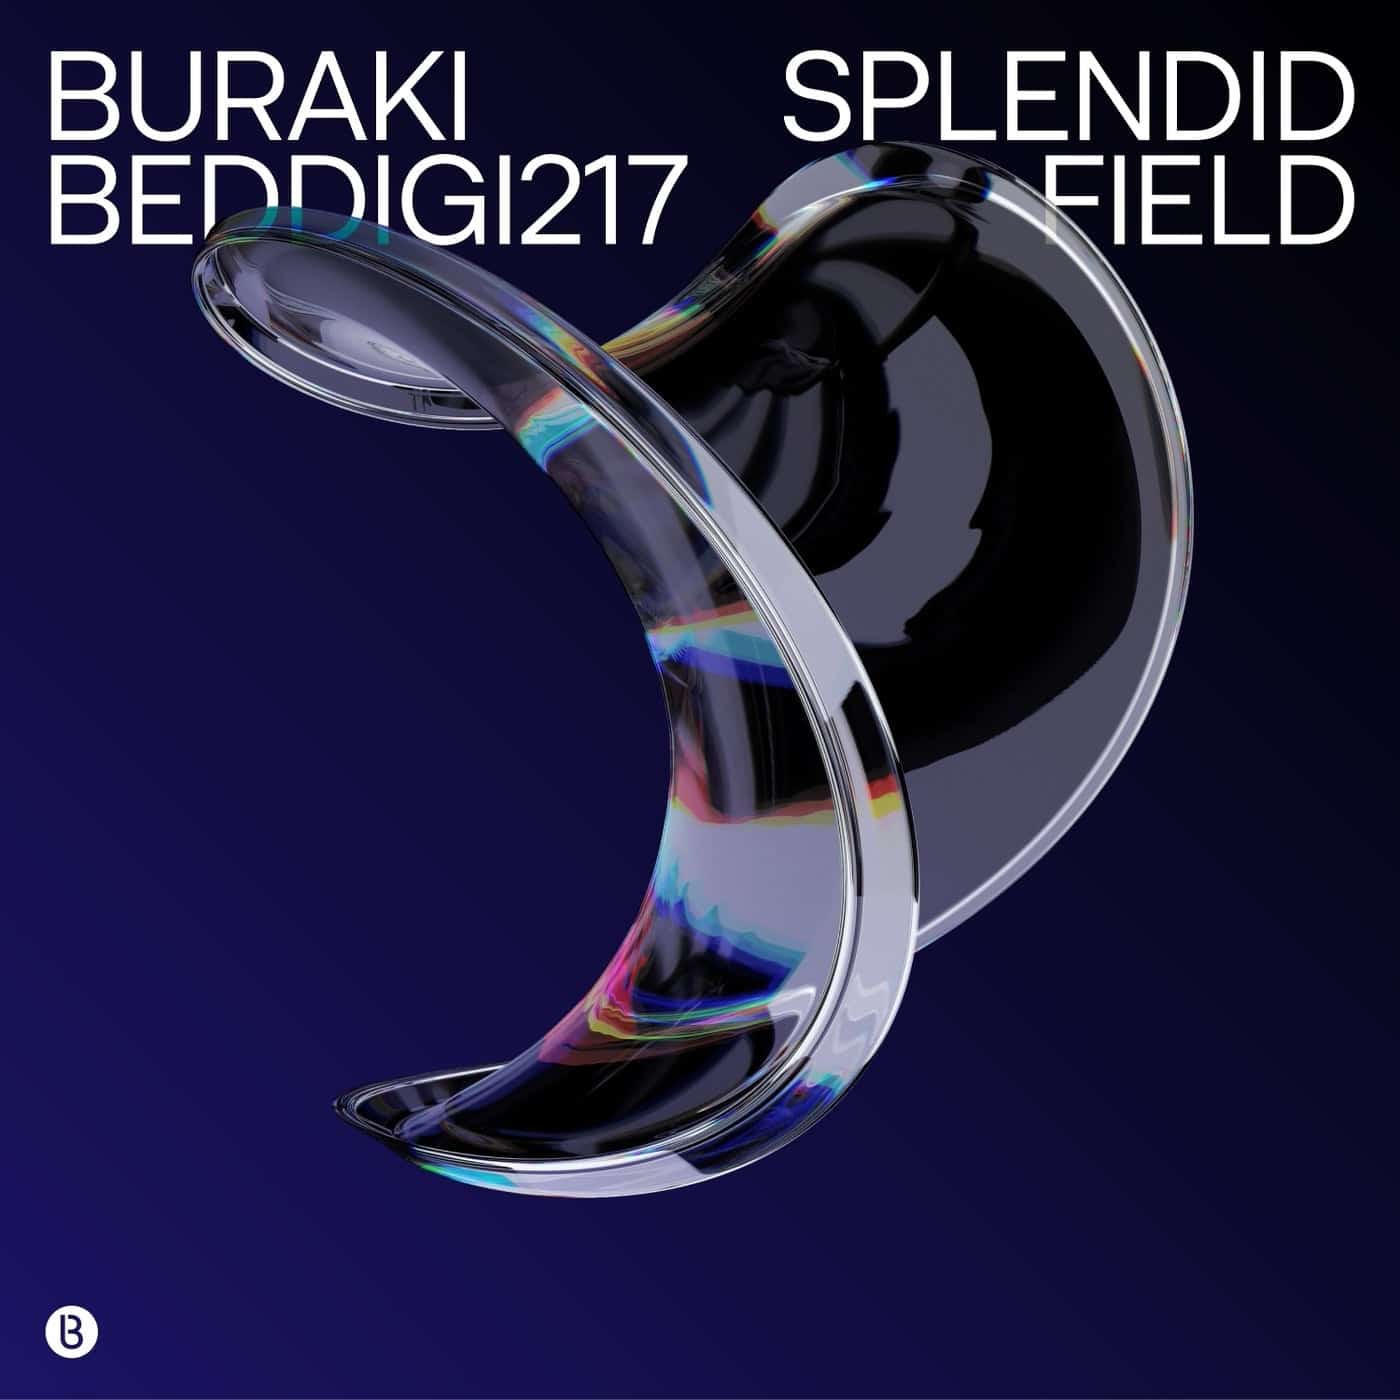 image cover: Buraki - Splendid Field / BEDDIGI217